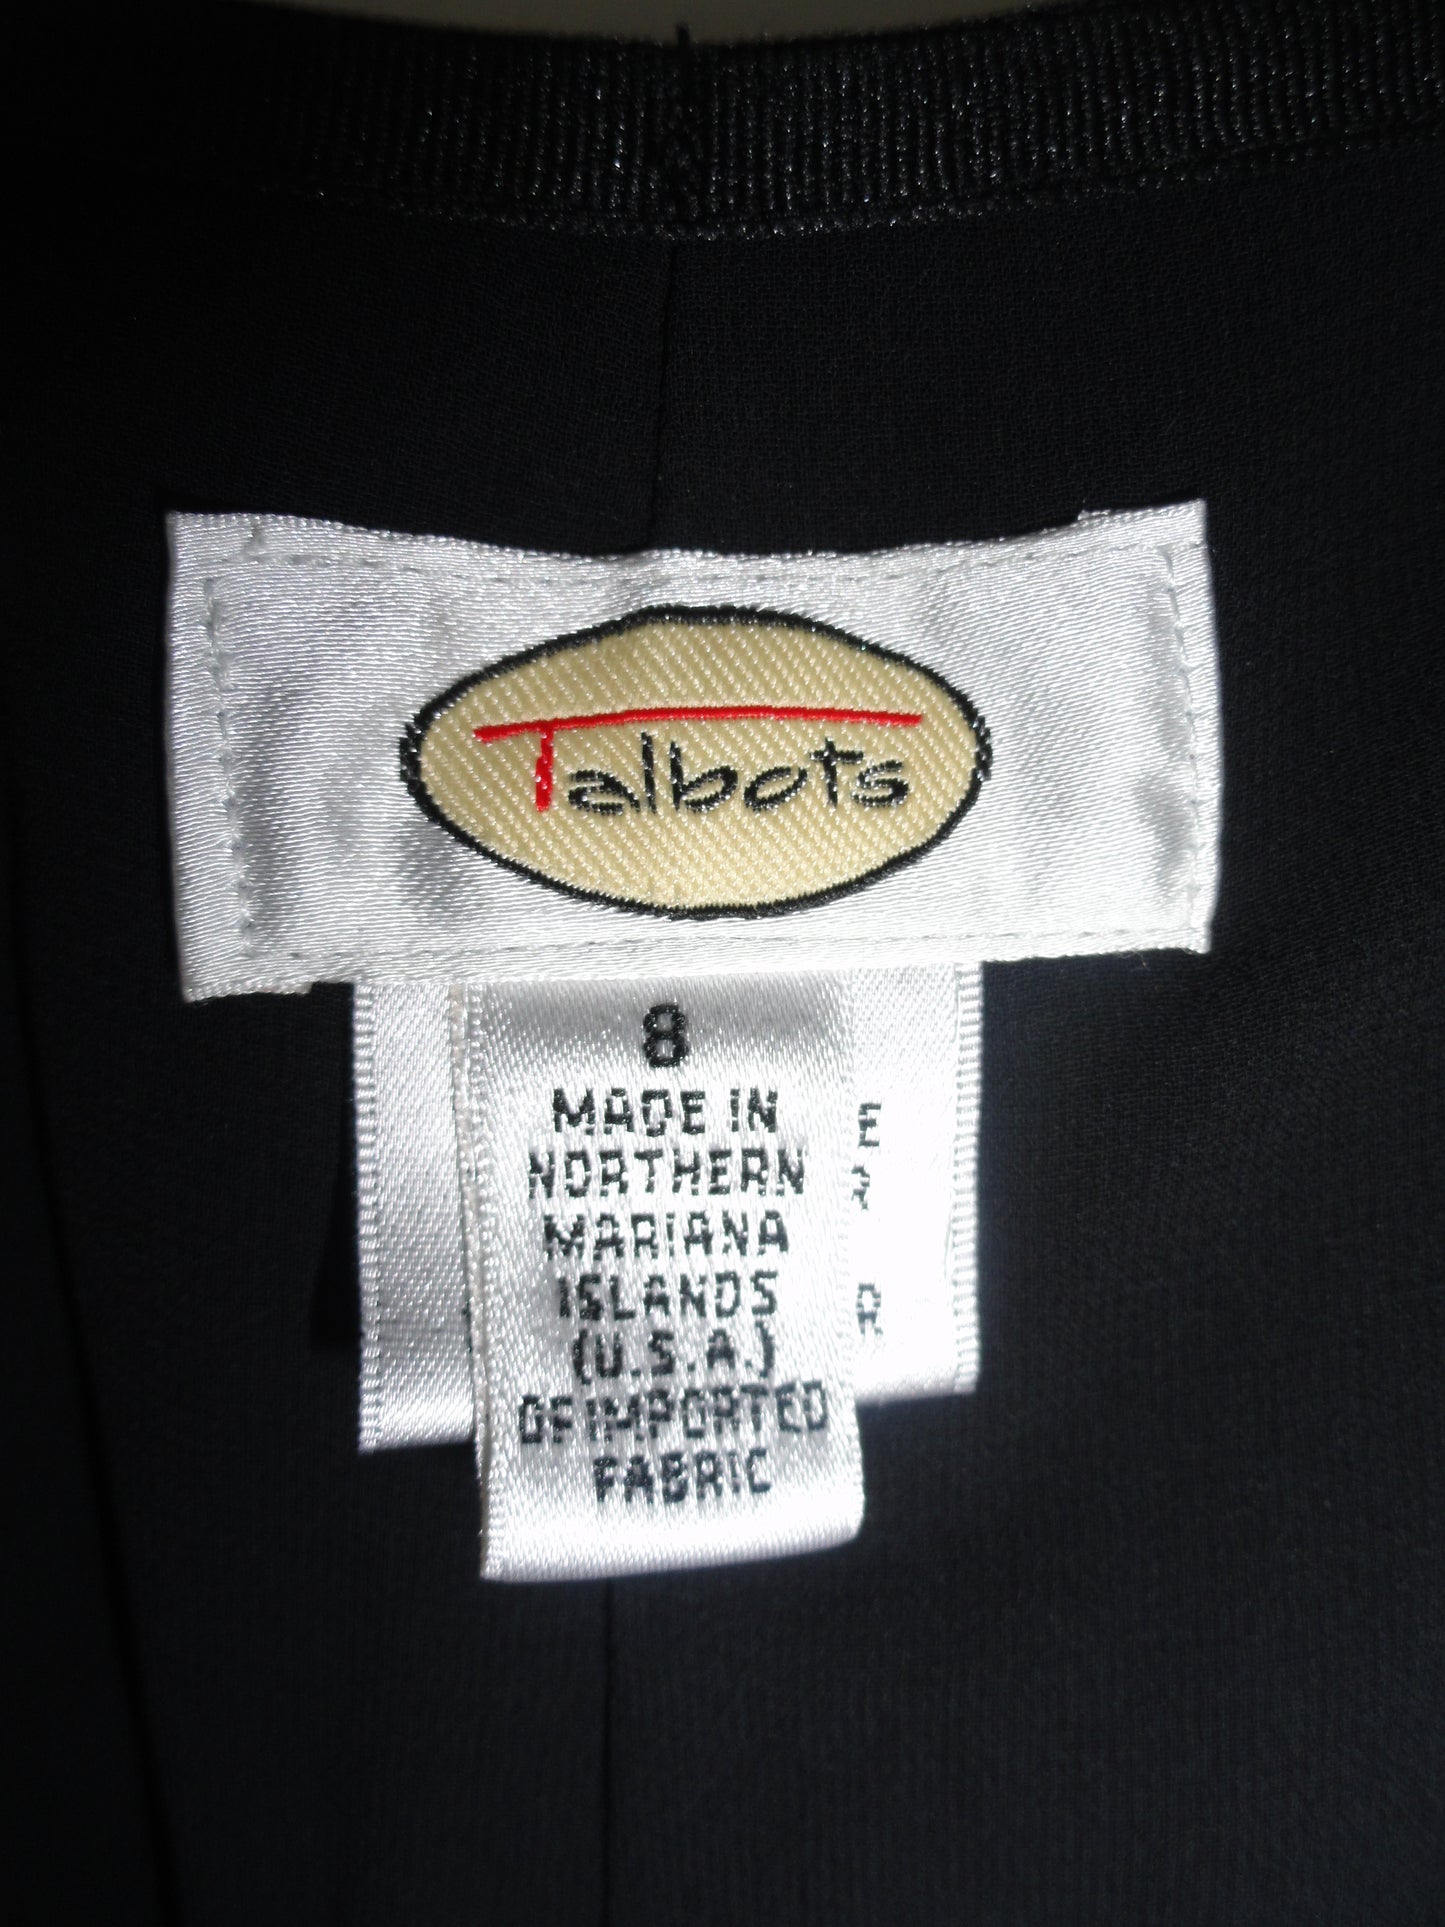 Talbots Women's Pants Black Size 8 SKU 000167